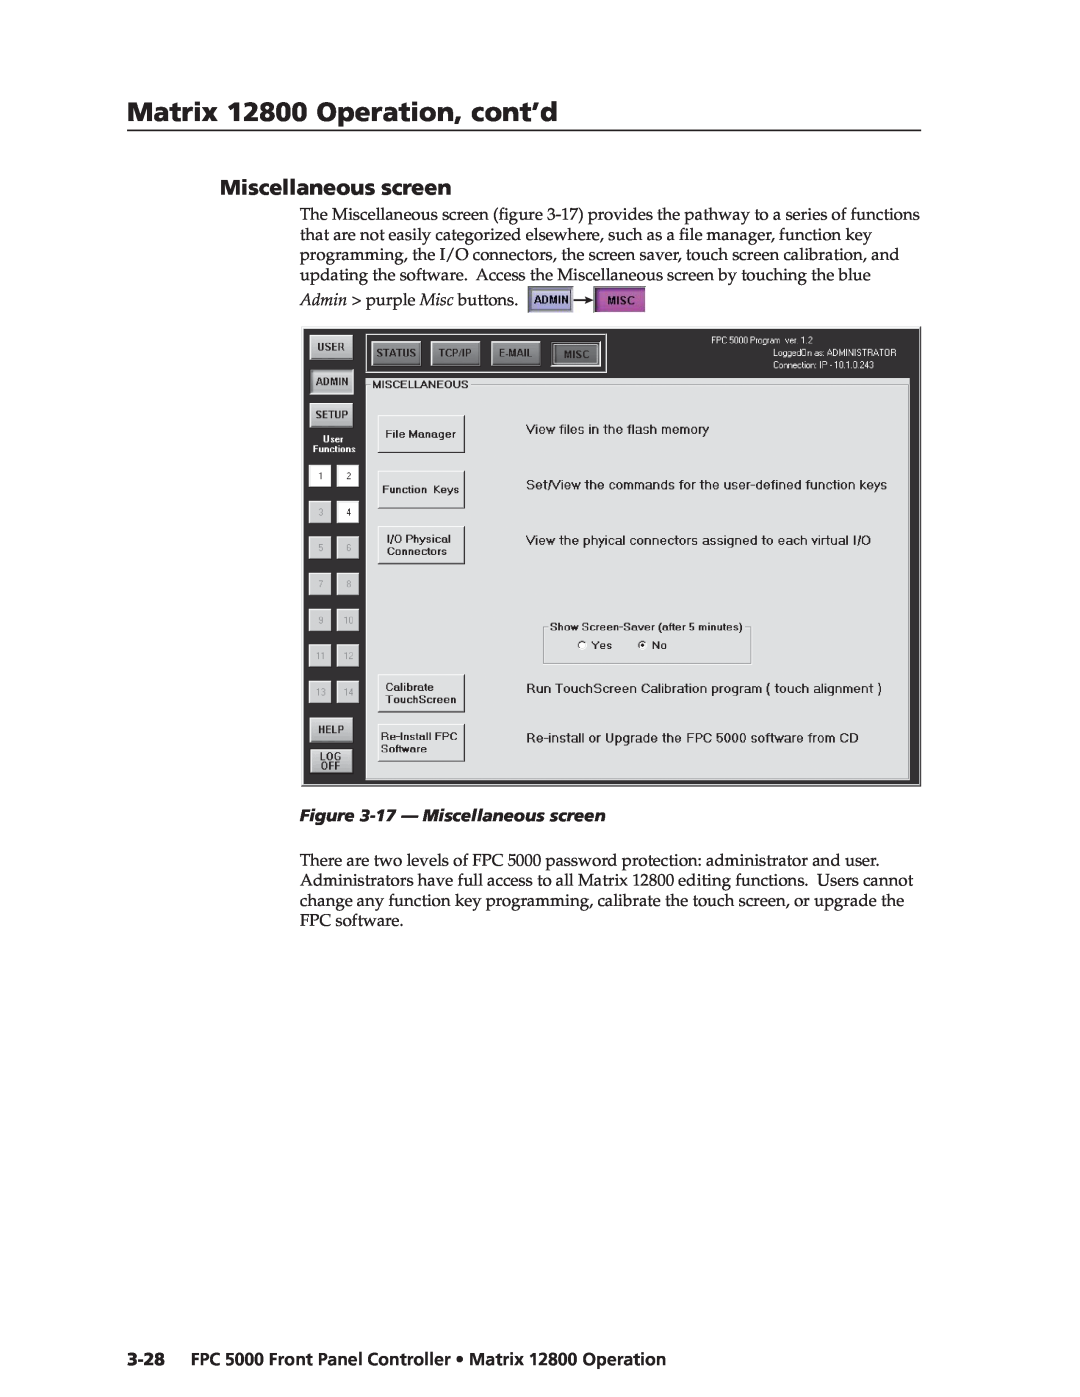 Extron electronic manual 17 - Miscellaneous screen, FPC 5000 Front Panel Controller Matrix 12800 Operation 